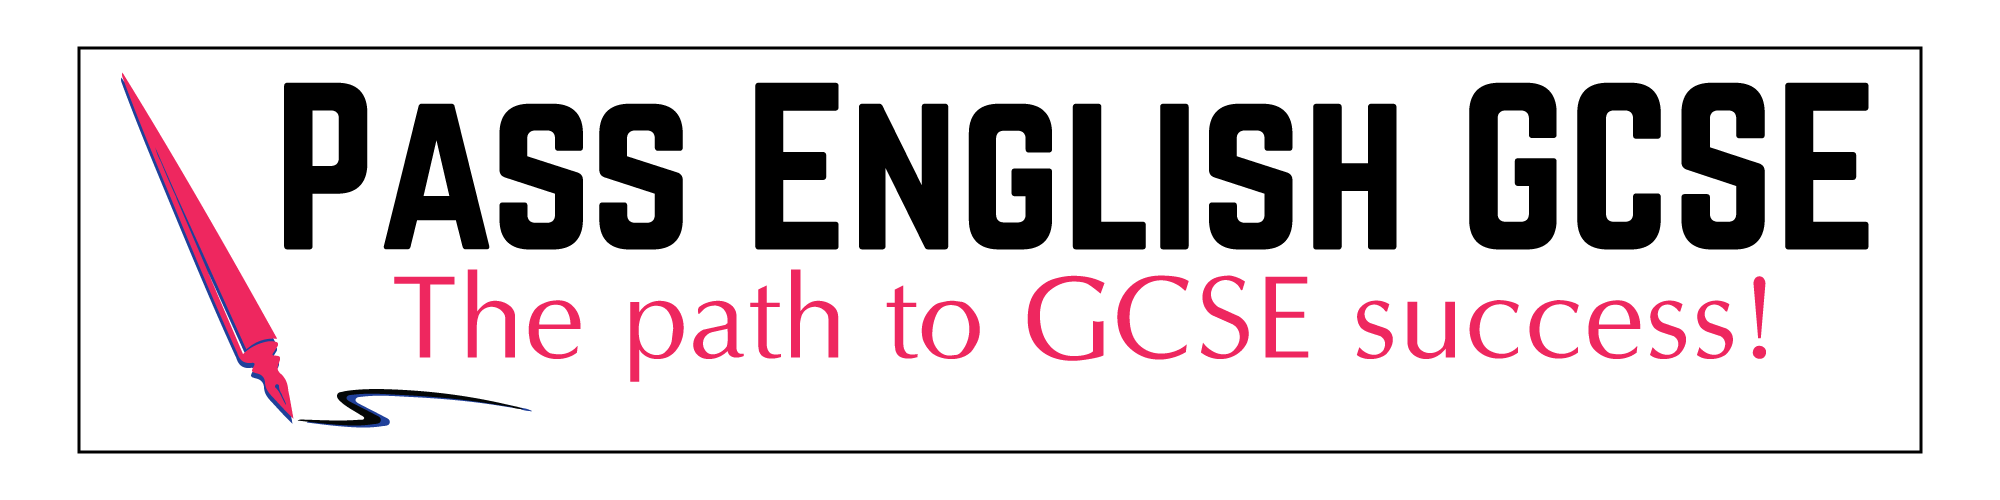 Pass English GCSE